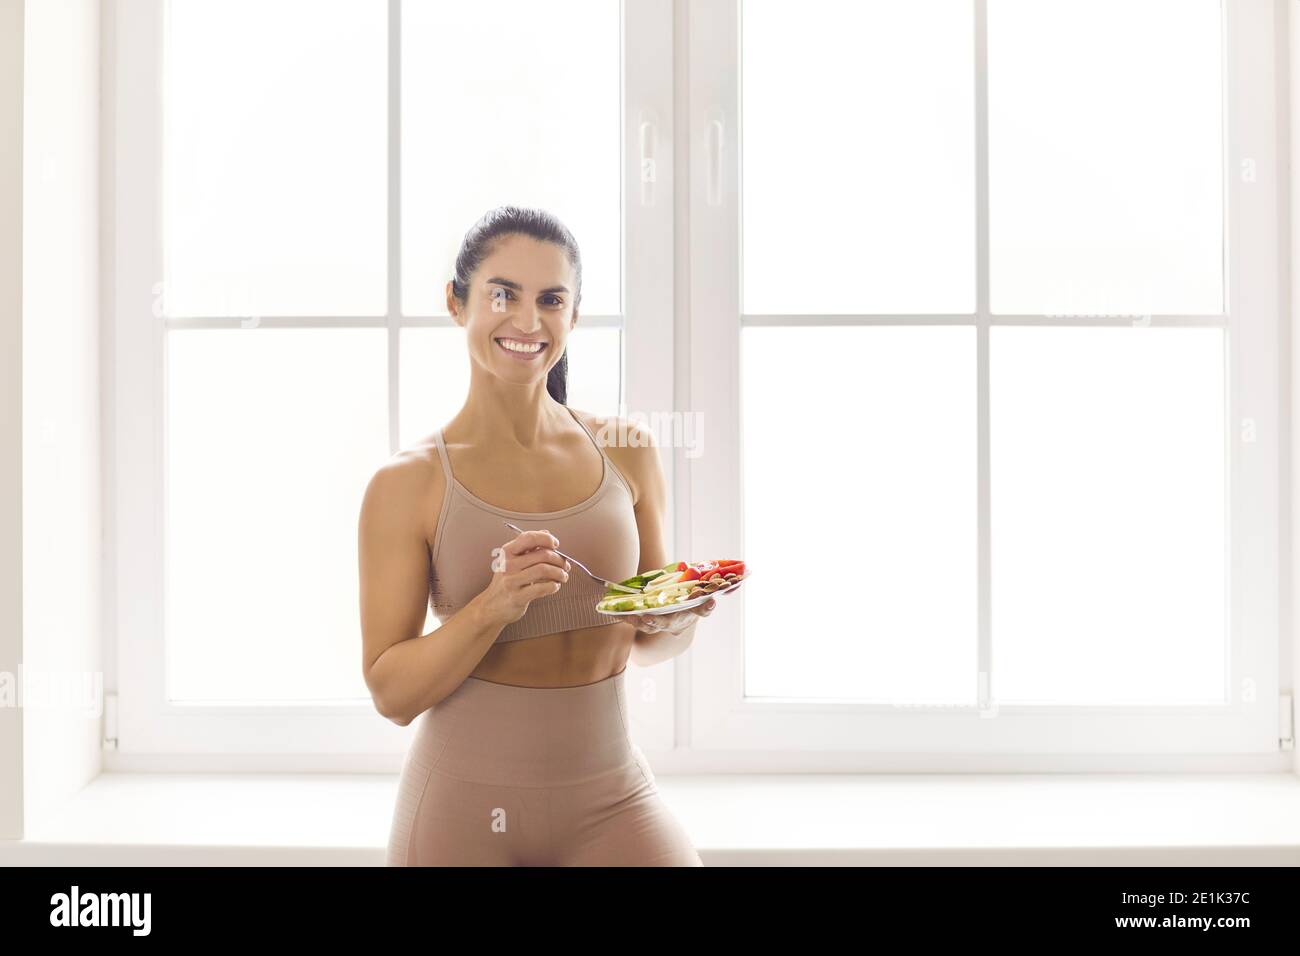 Gesunde Ernährung, aktive Fitness-Lifestyle, saubere Ernährung Ernährung Konzept Stockfoto